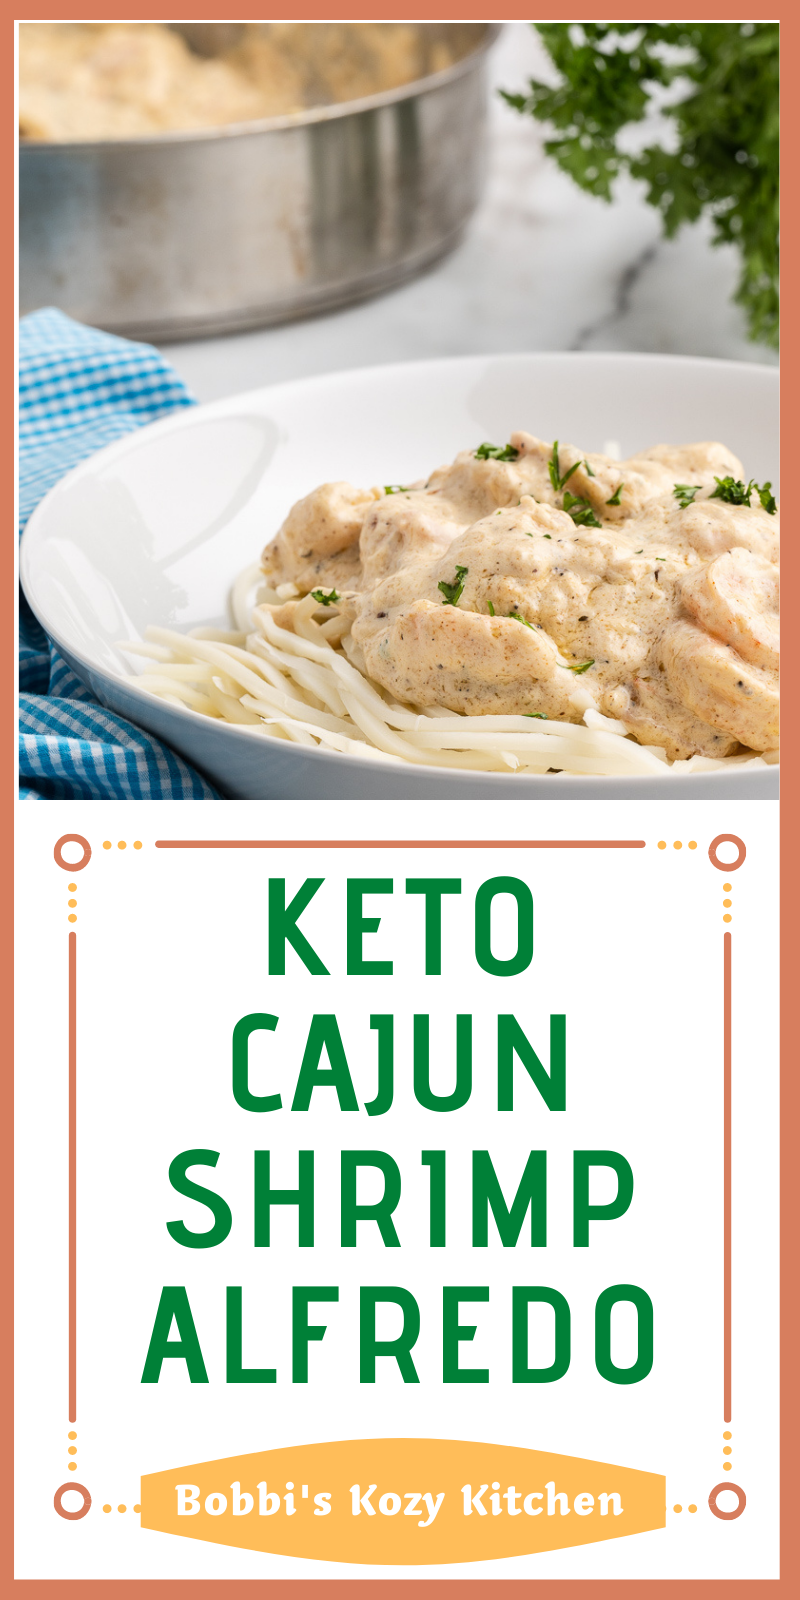 Keto Cajun Shrimp Alfredo - This keto shrimp alfredo is packed full of flavor with a Cajun twist. It is easy to make and takes less than 30 minutes!  #keto #lowcarb #glutenfree #pasta #shrimp #cajun #alfredo